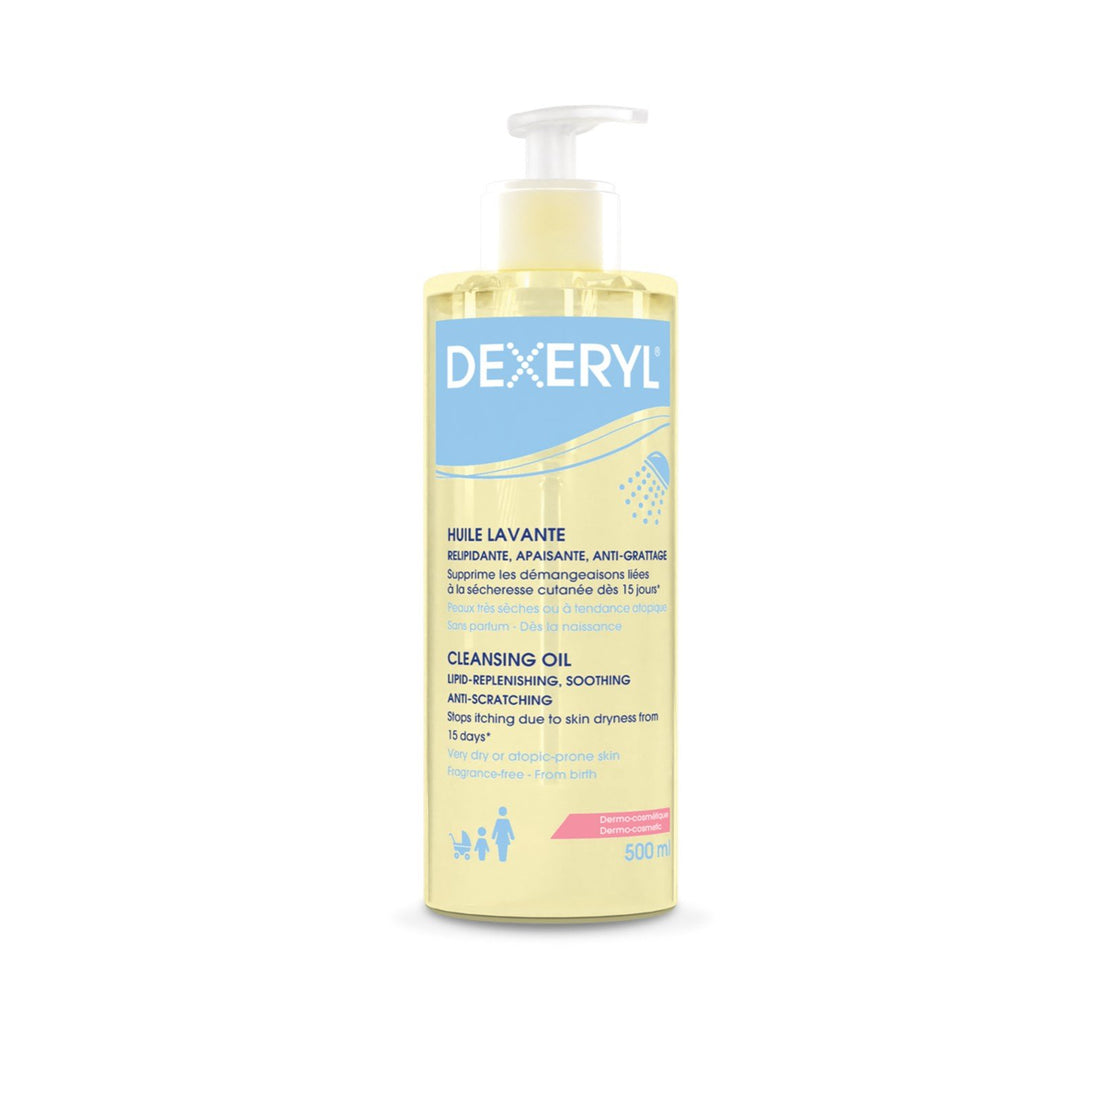 Dexeryl Cleasing Oil Fragrance-Free 500ml